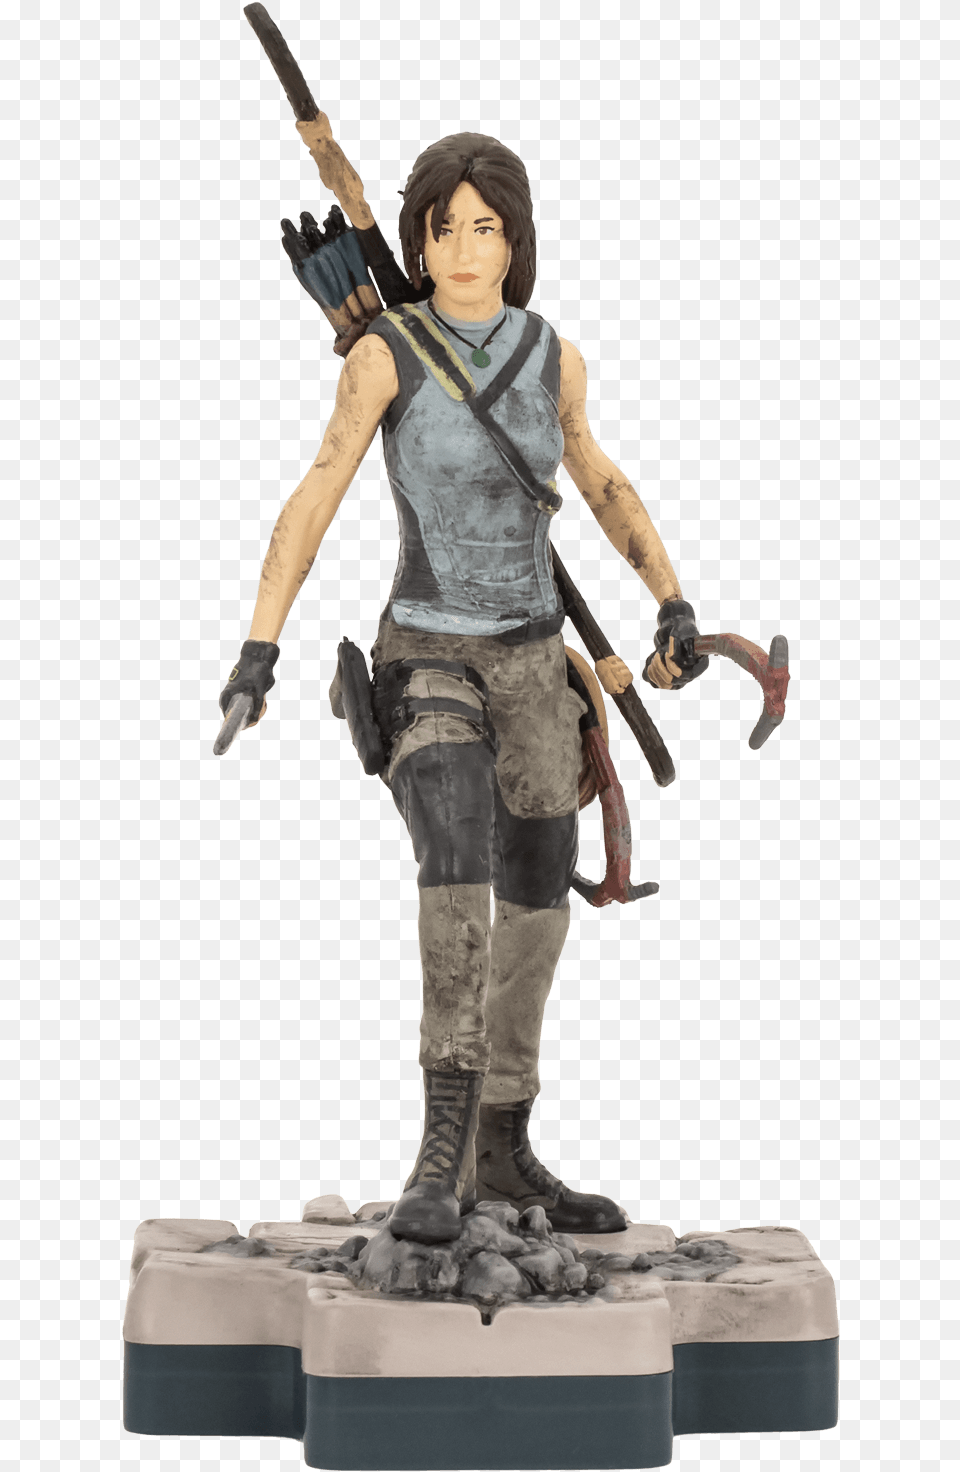 Lara Croft Tomb Raider Statue, Figurine, Boy, Child, Person Png